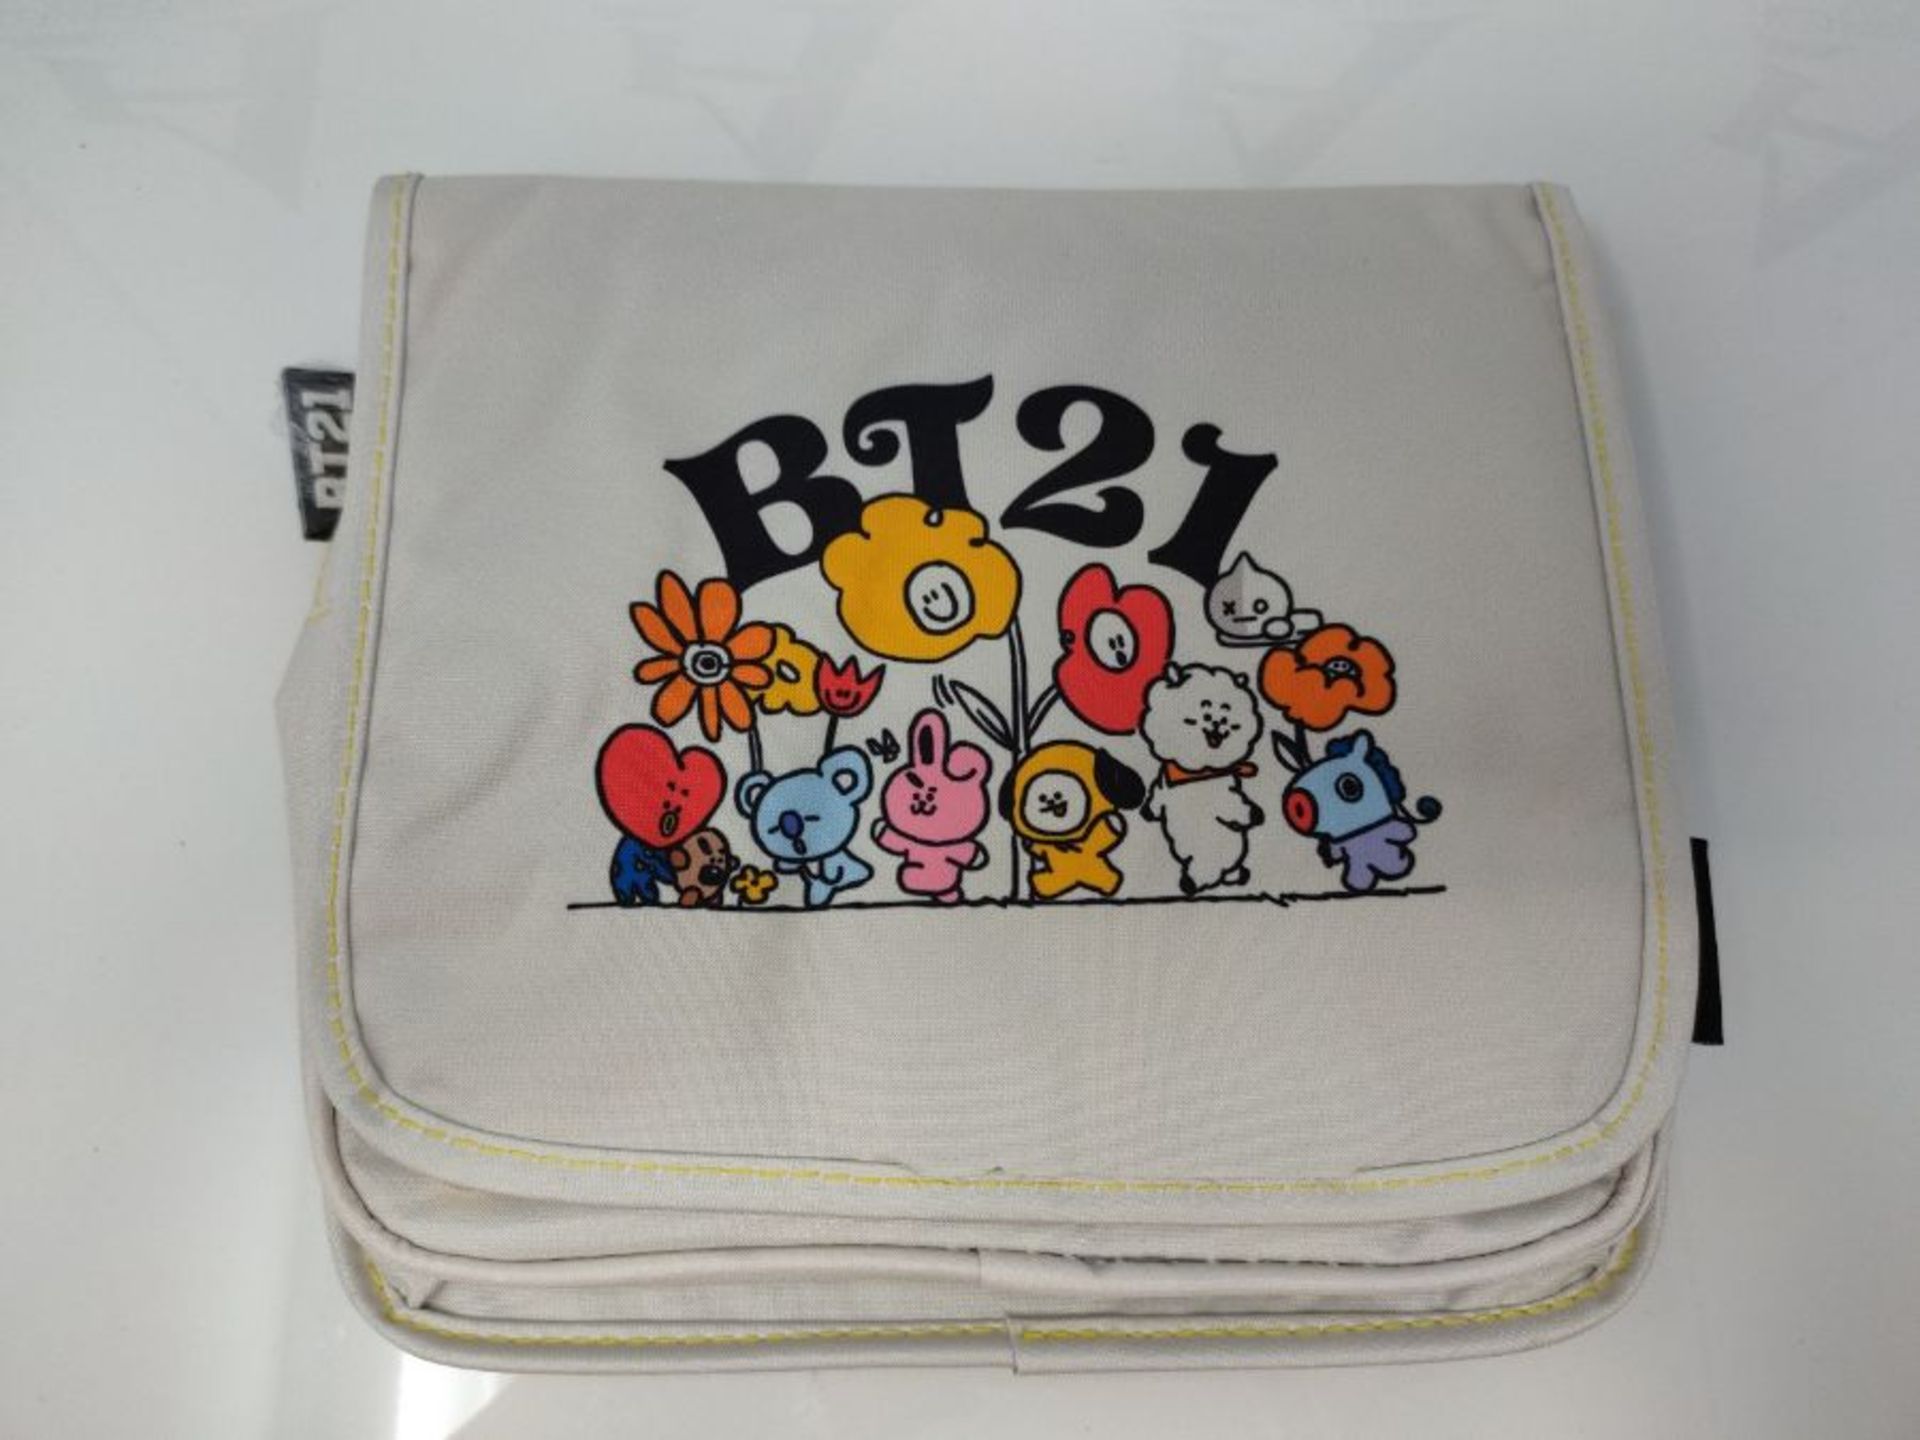 Official Merchandise BT21 Hanging Travel Toiletry Bag | Hanging Toiletry Bag with Hang - Image 3 of 3